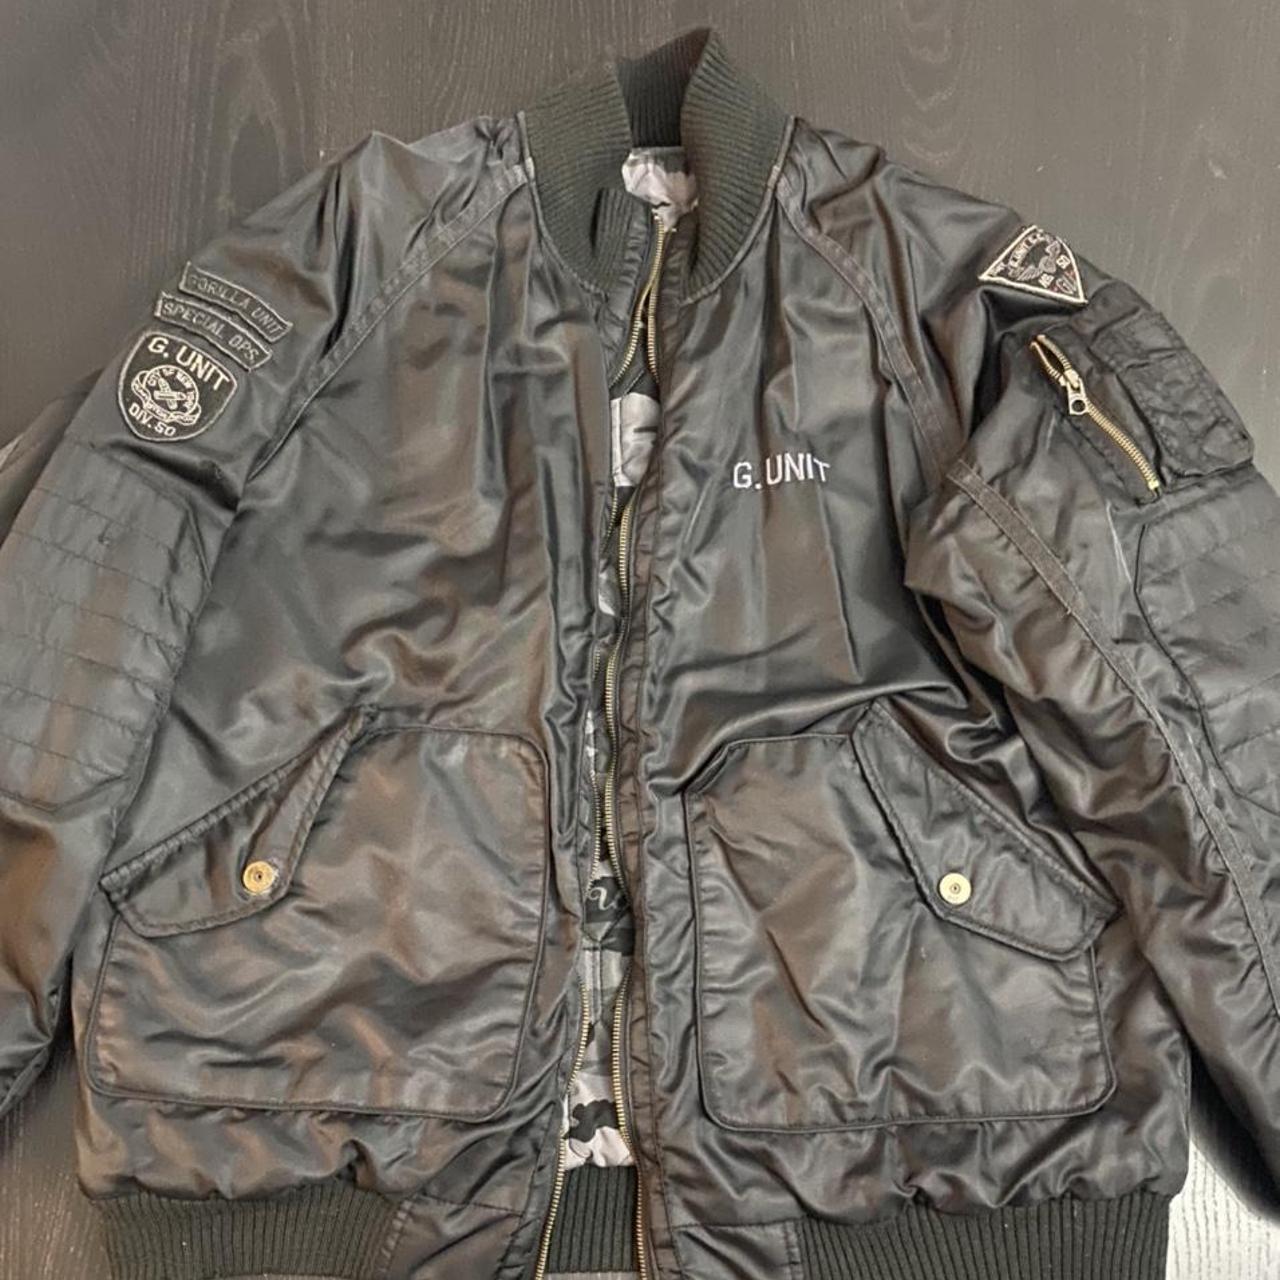 2000’s G-unit reversible jacket. Urban Camo print on... - Depop